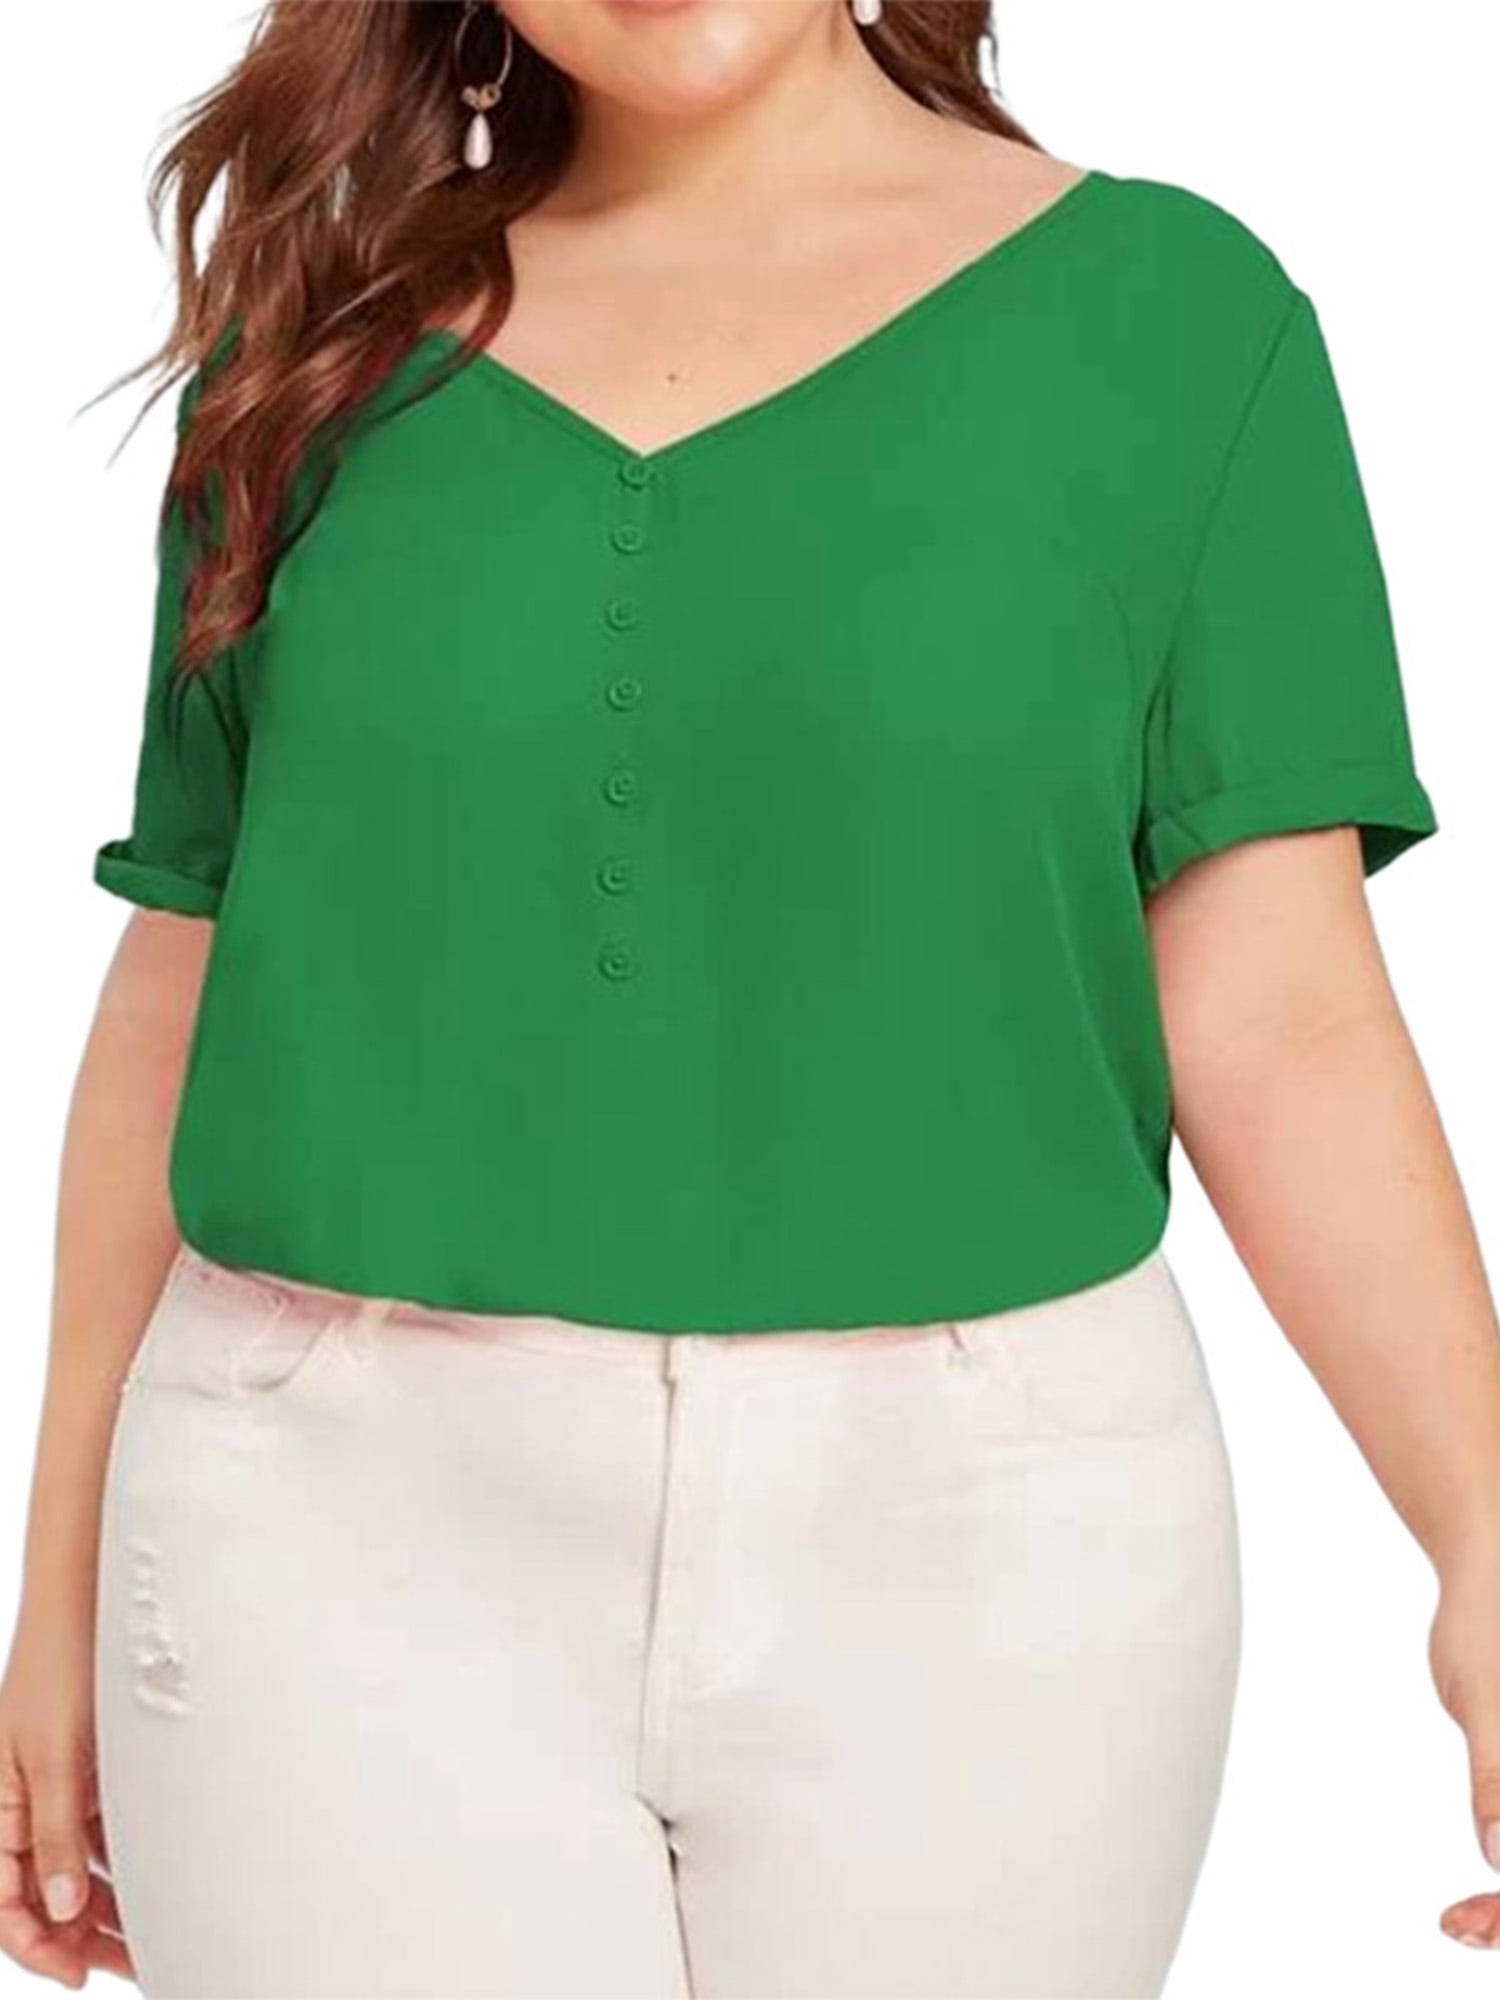 2020 Womens Tops Short Sleeve Casual T Shirt Summer Basic Tunic Tees 